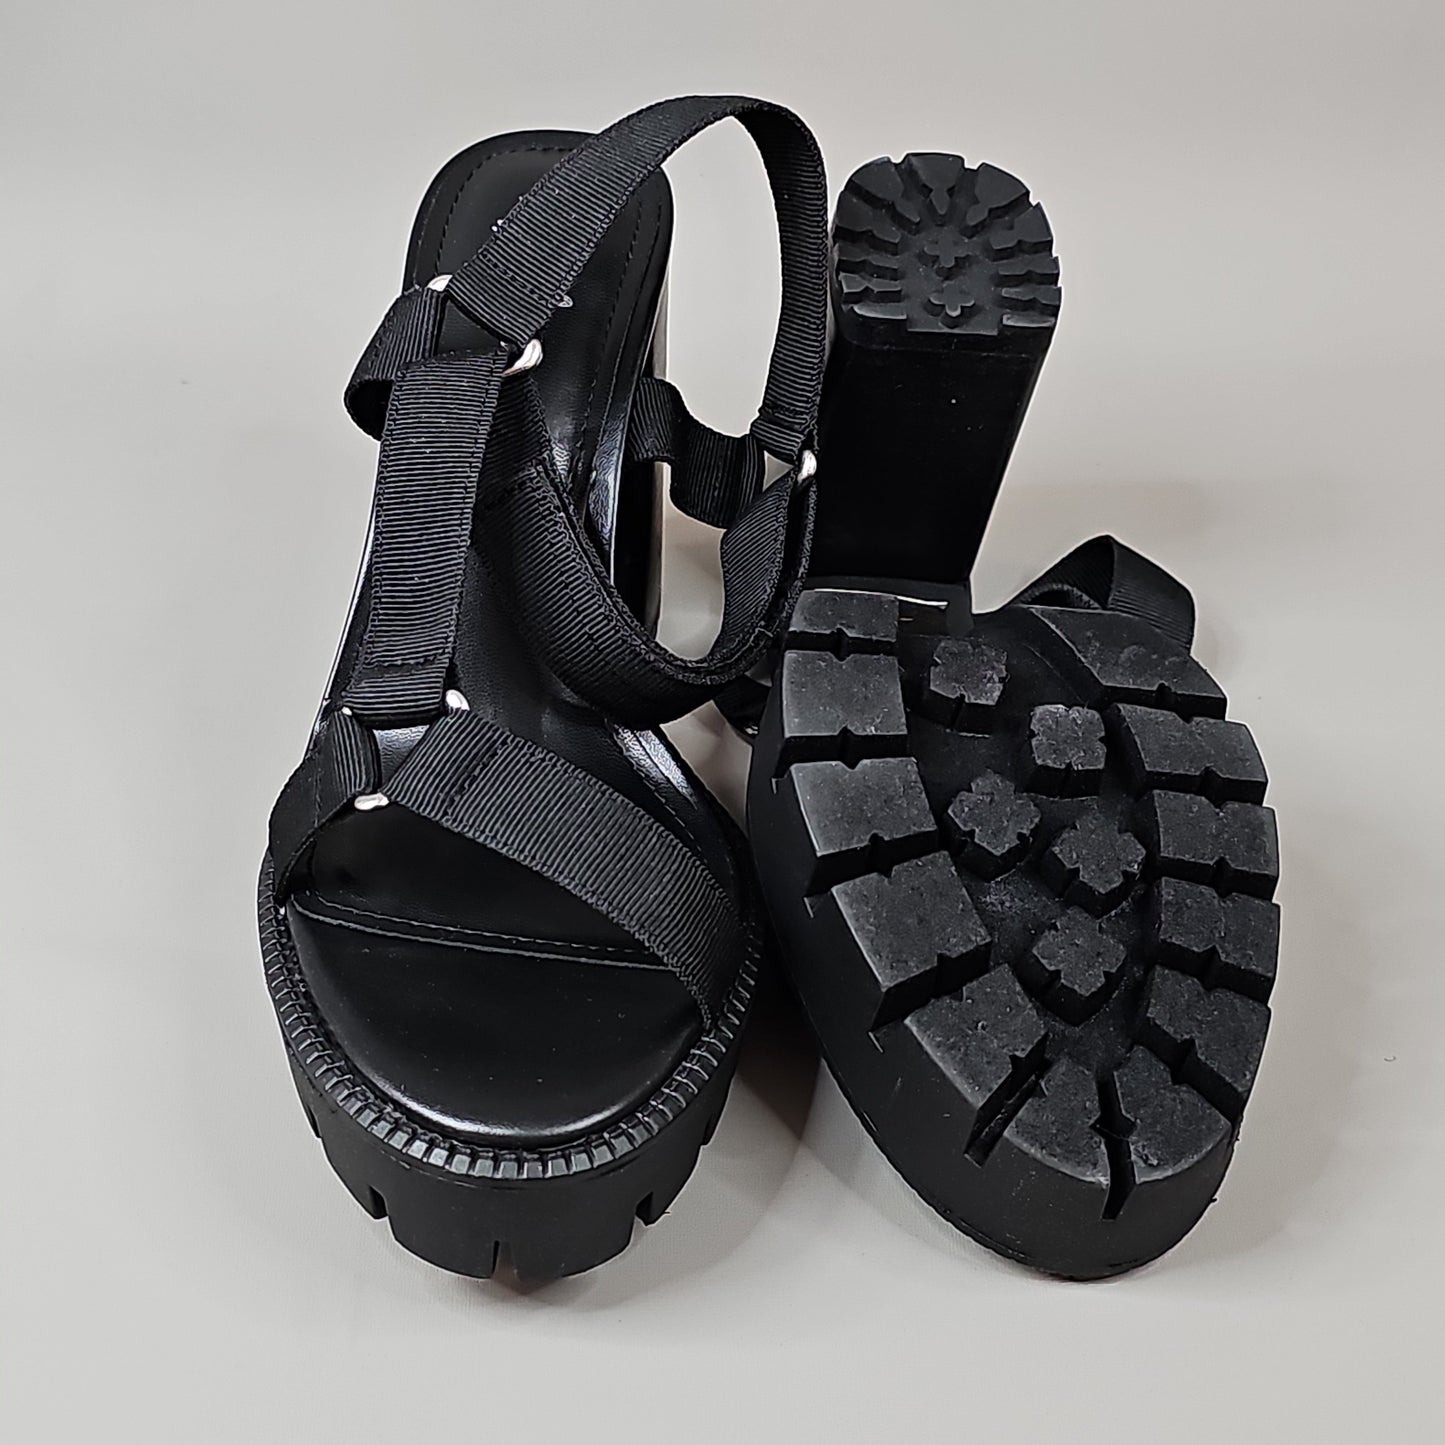 CHARLES BY CHARLES DAVID Women's Vast Sport Sandal Shoe Sz 6.5 M Black (New)